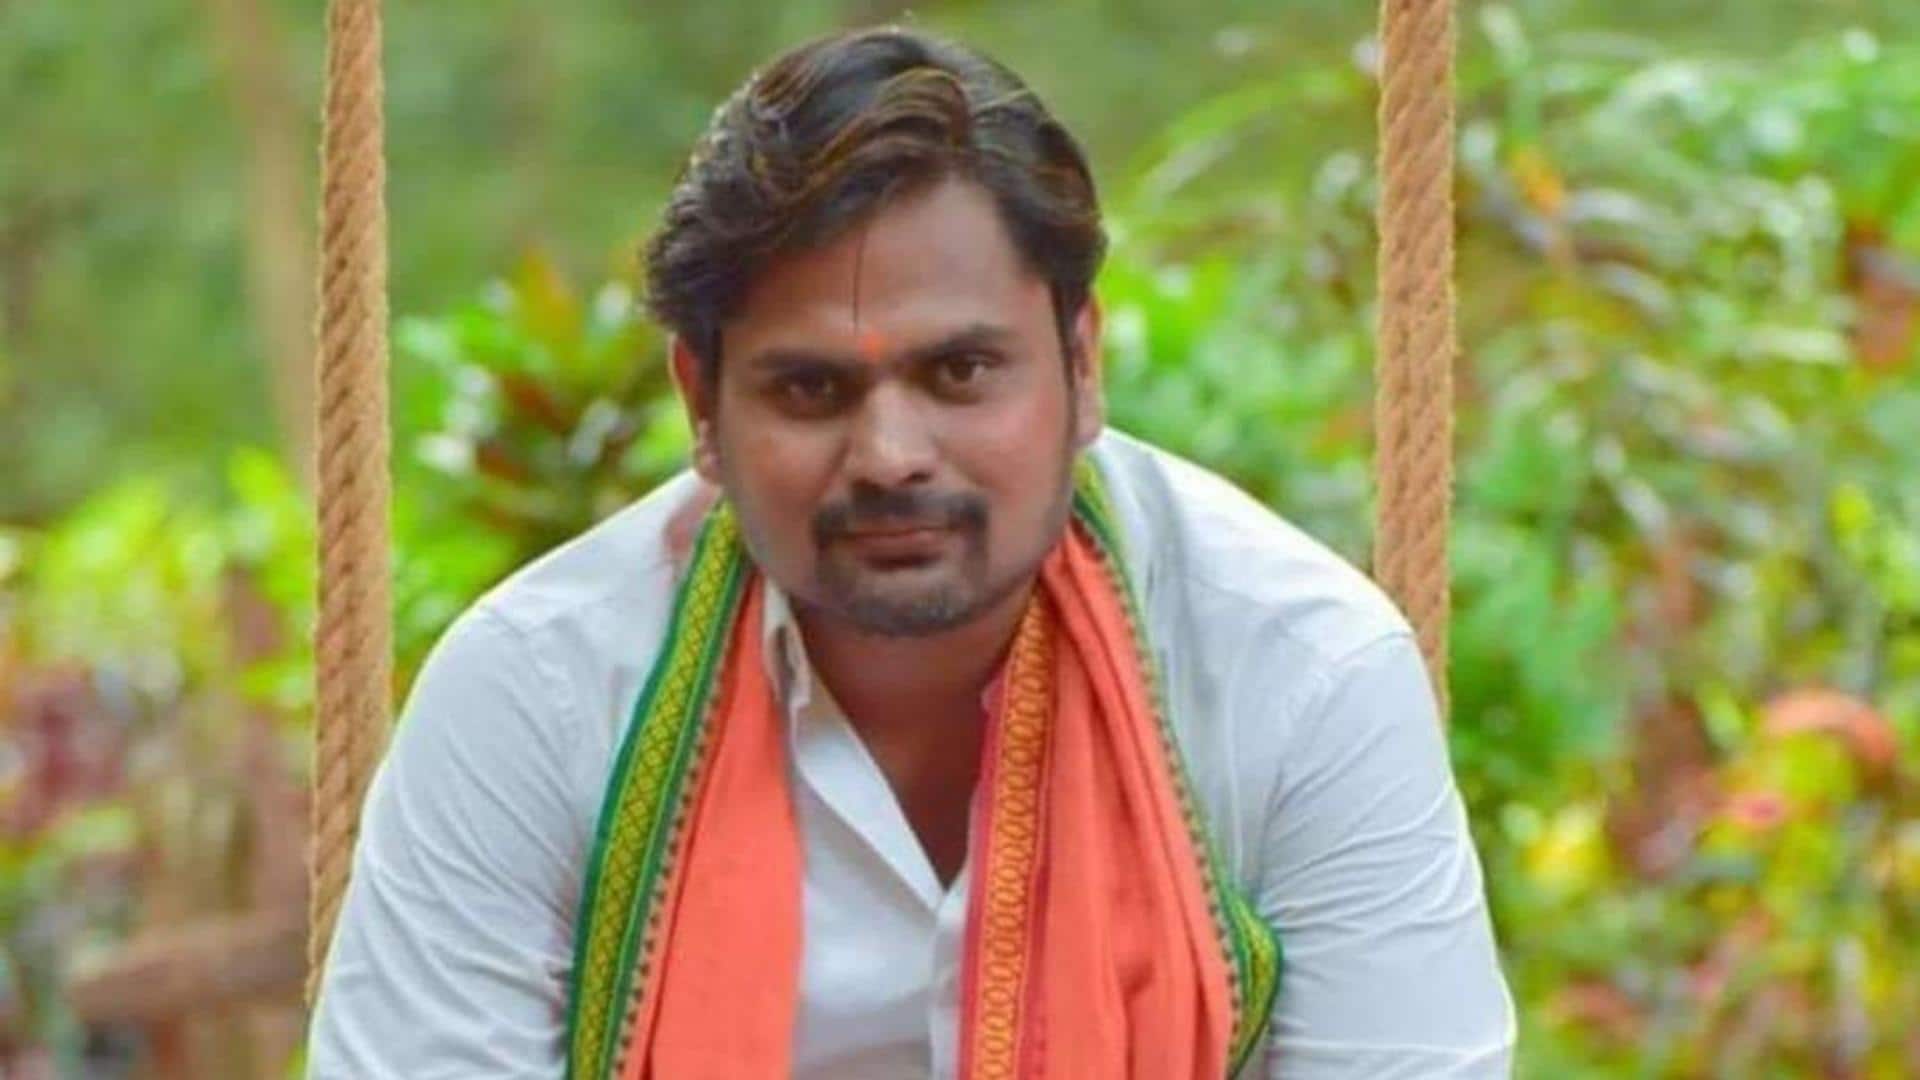 Karnataka: BJP's youth wing leader stabbed to death in Dharwad